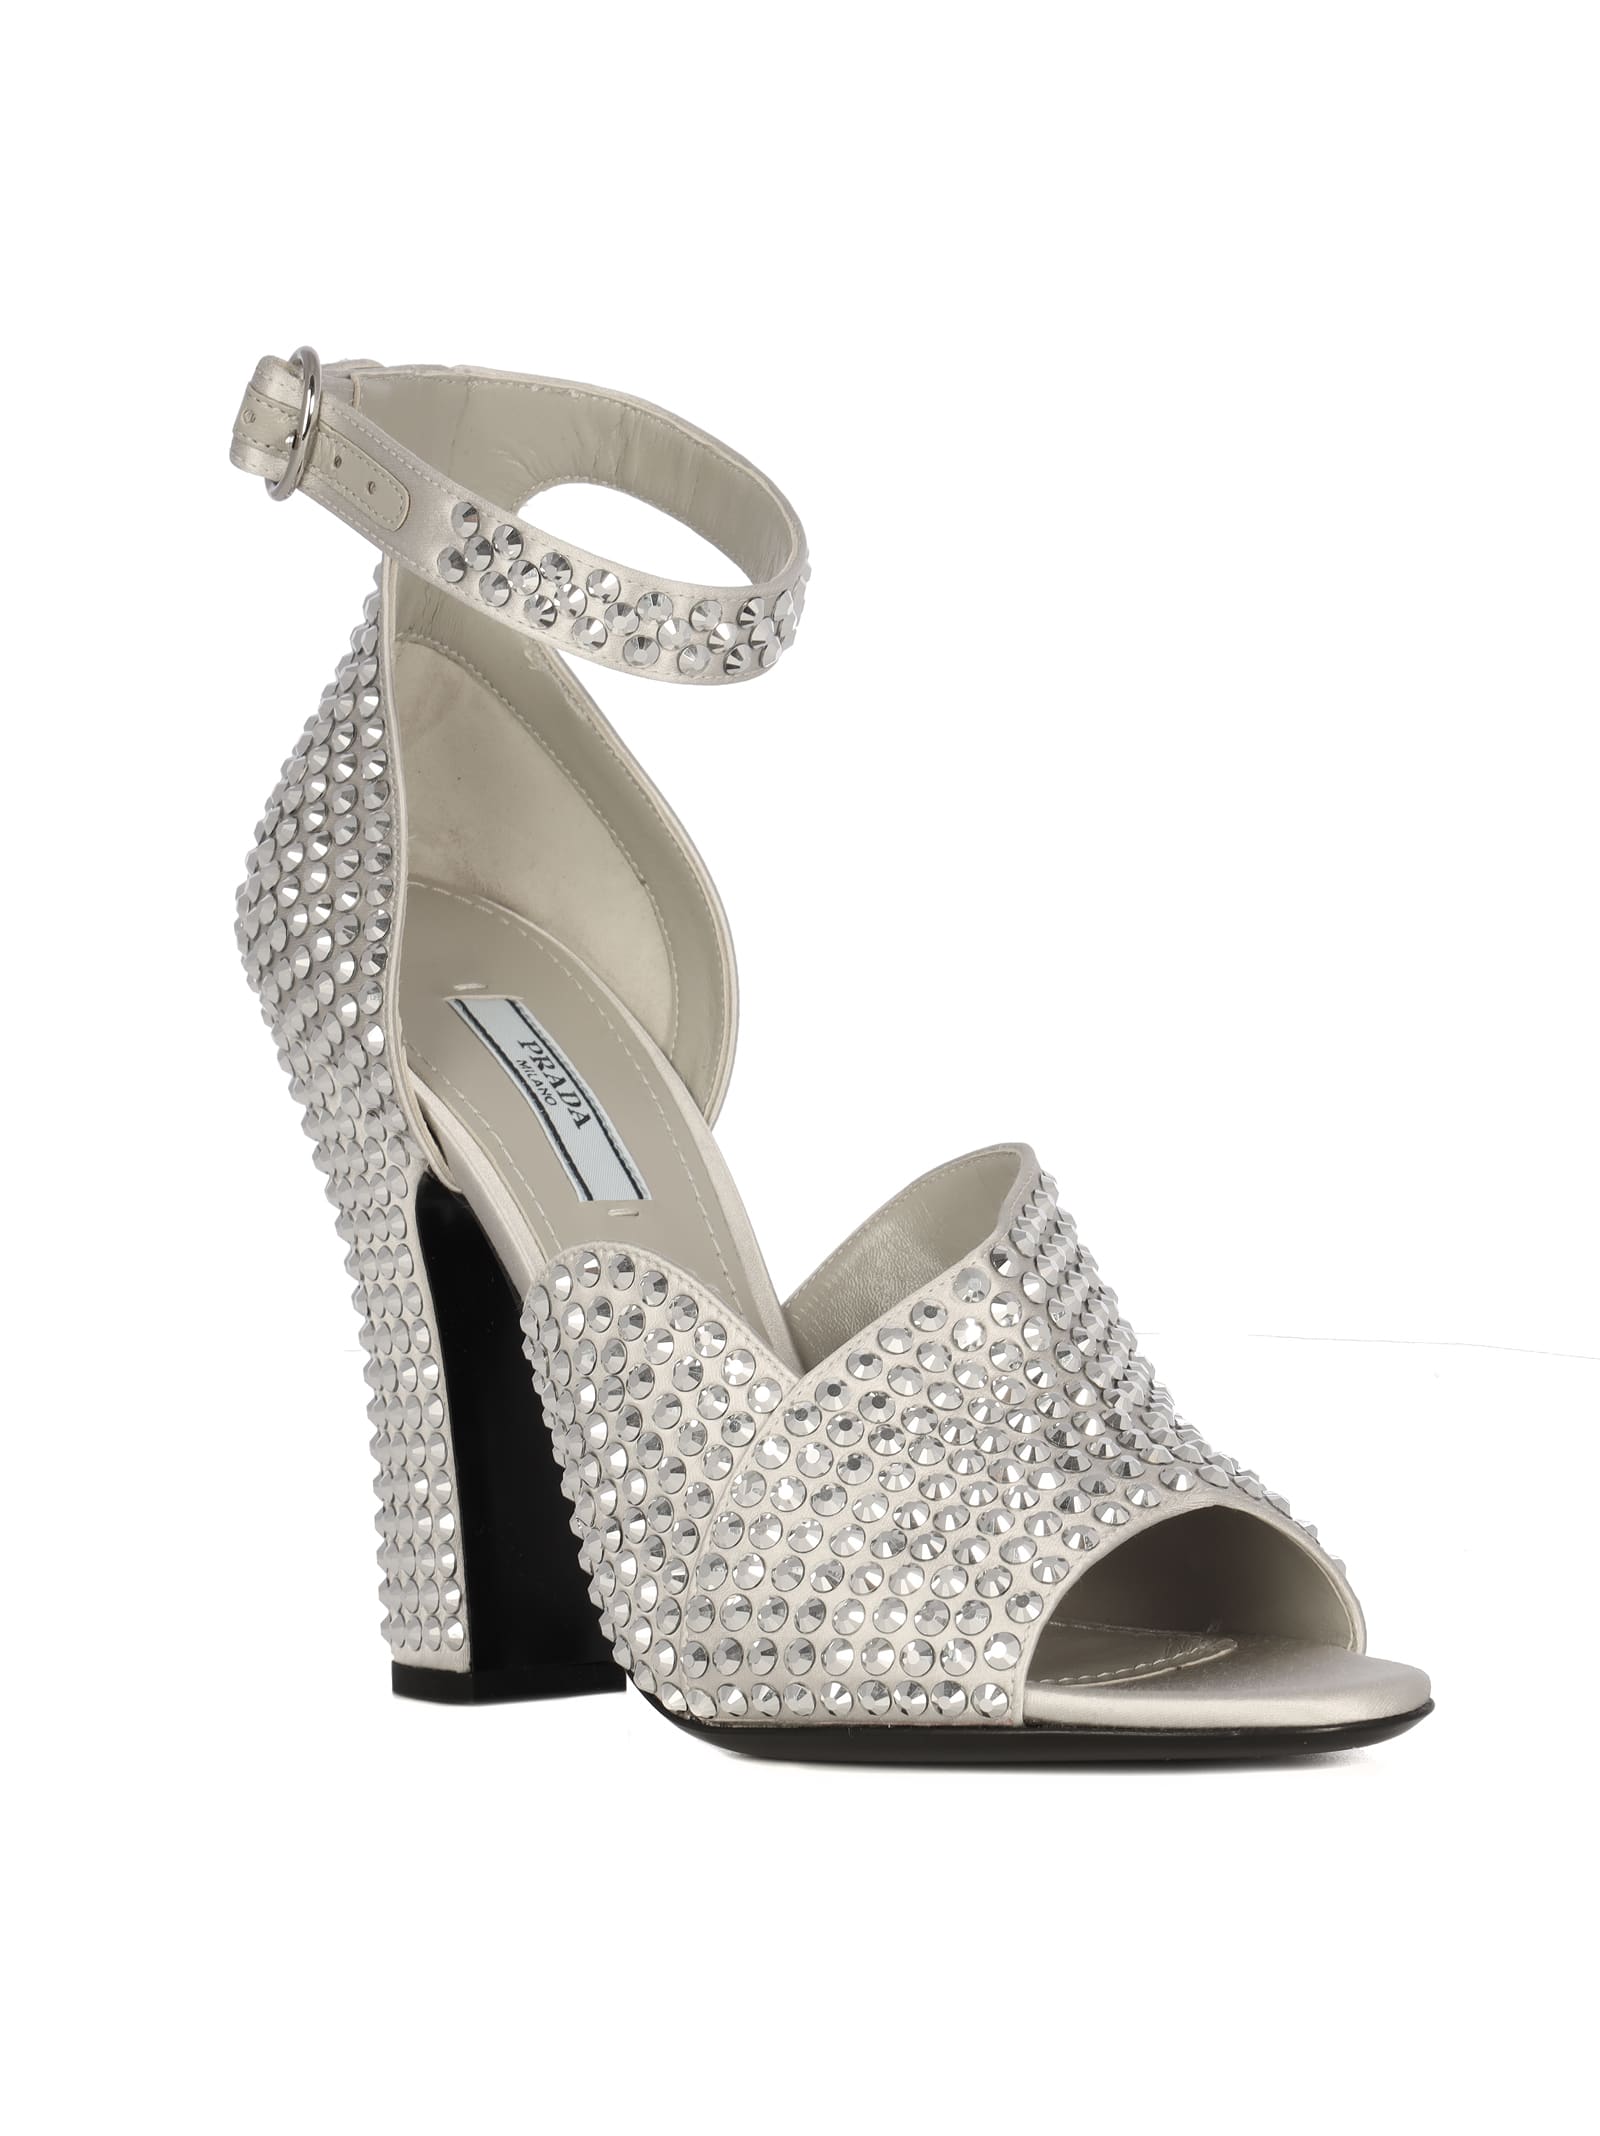 prada glitter heels, OFF 78%,Buy!